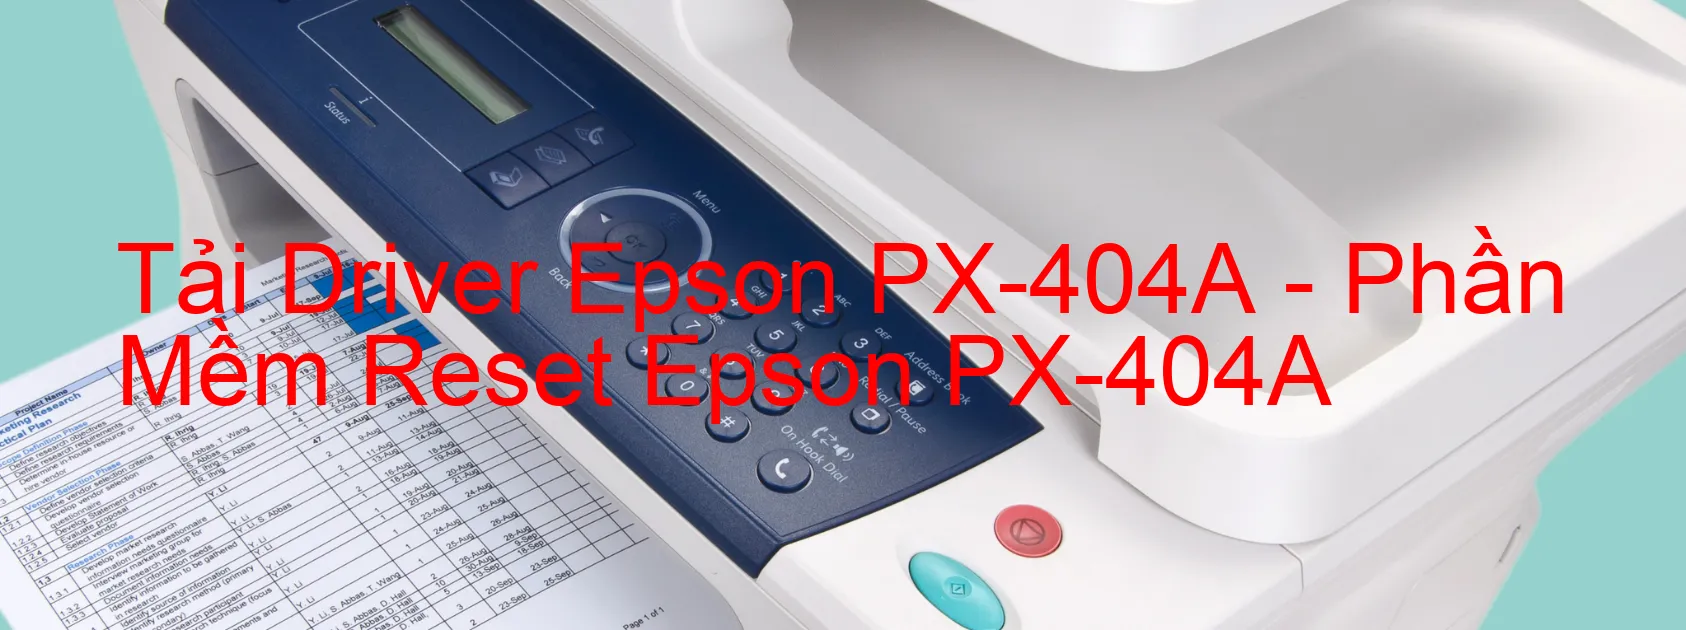 Driver Epson PX-404A, Phần Mềm Reset Epson PX-404A